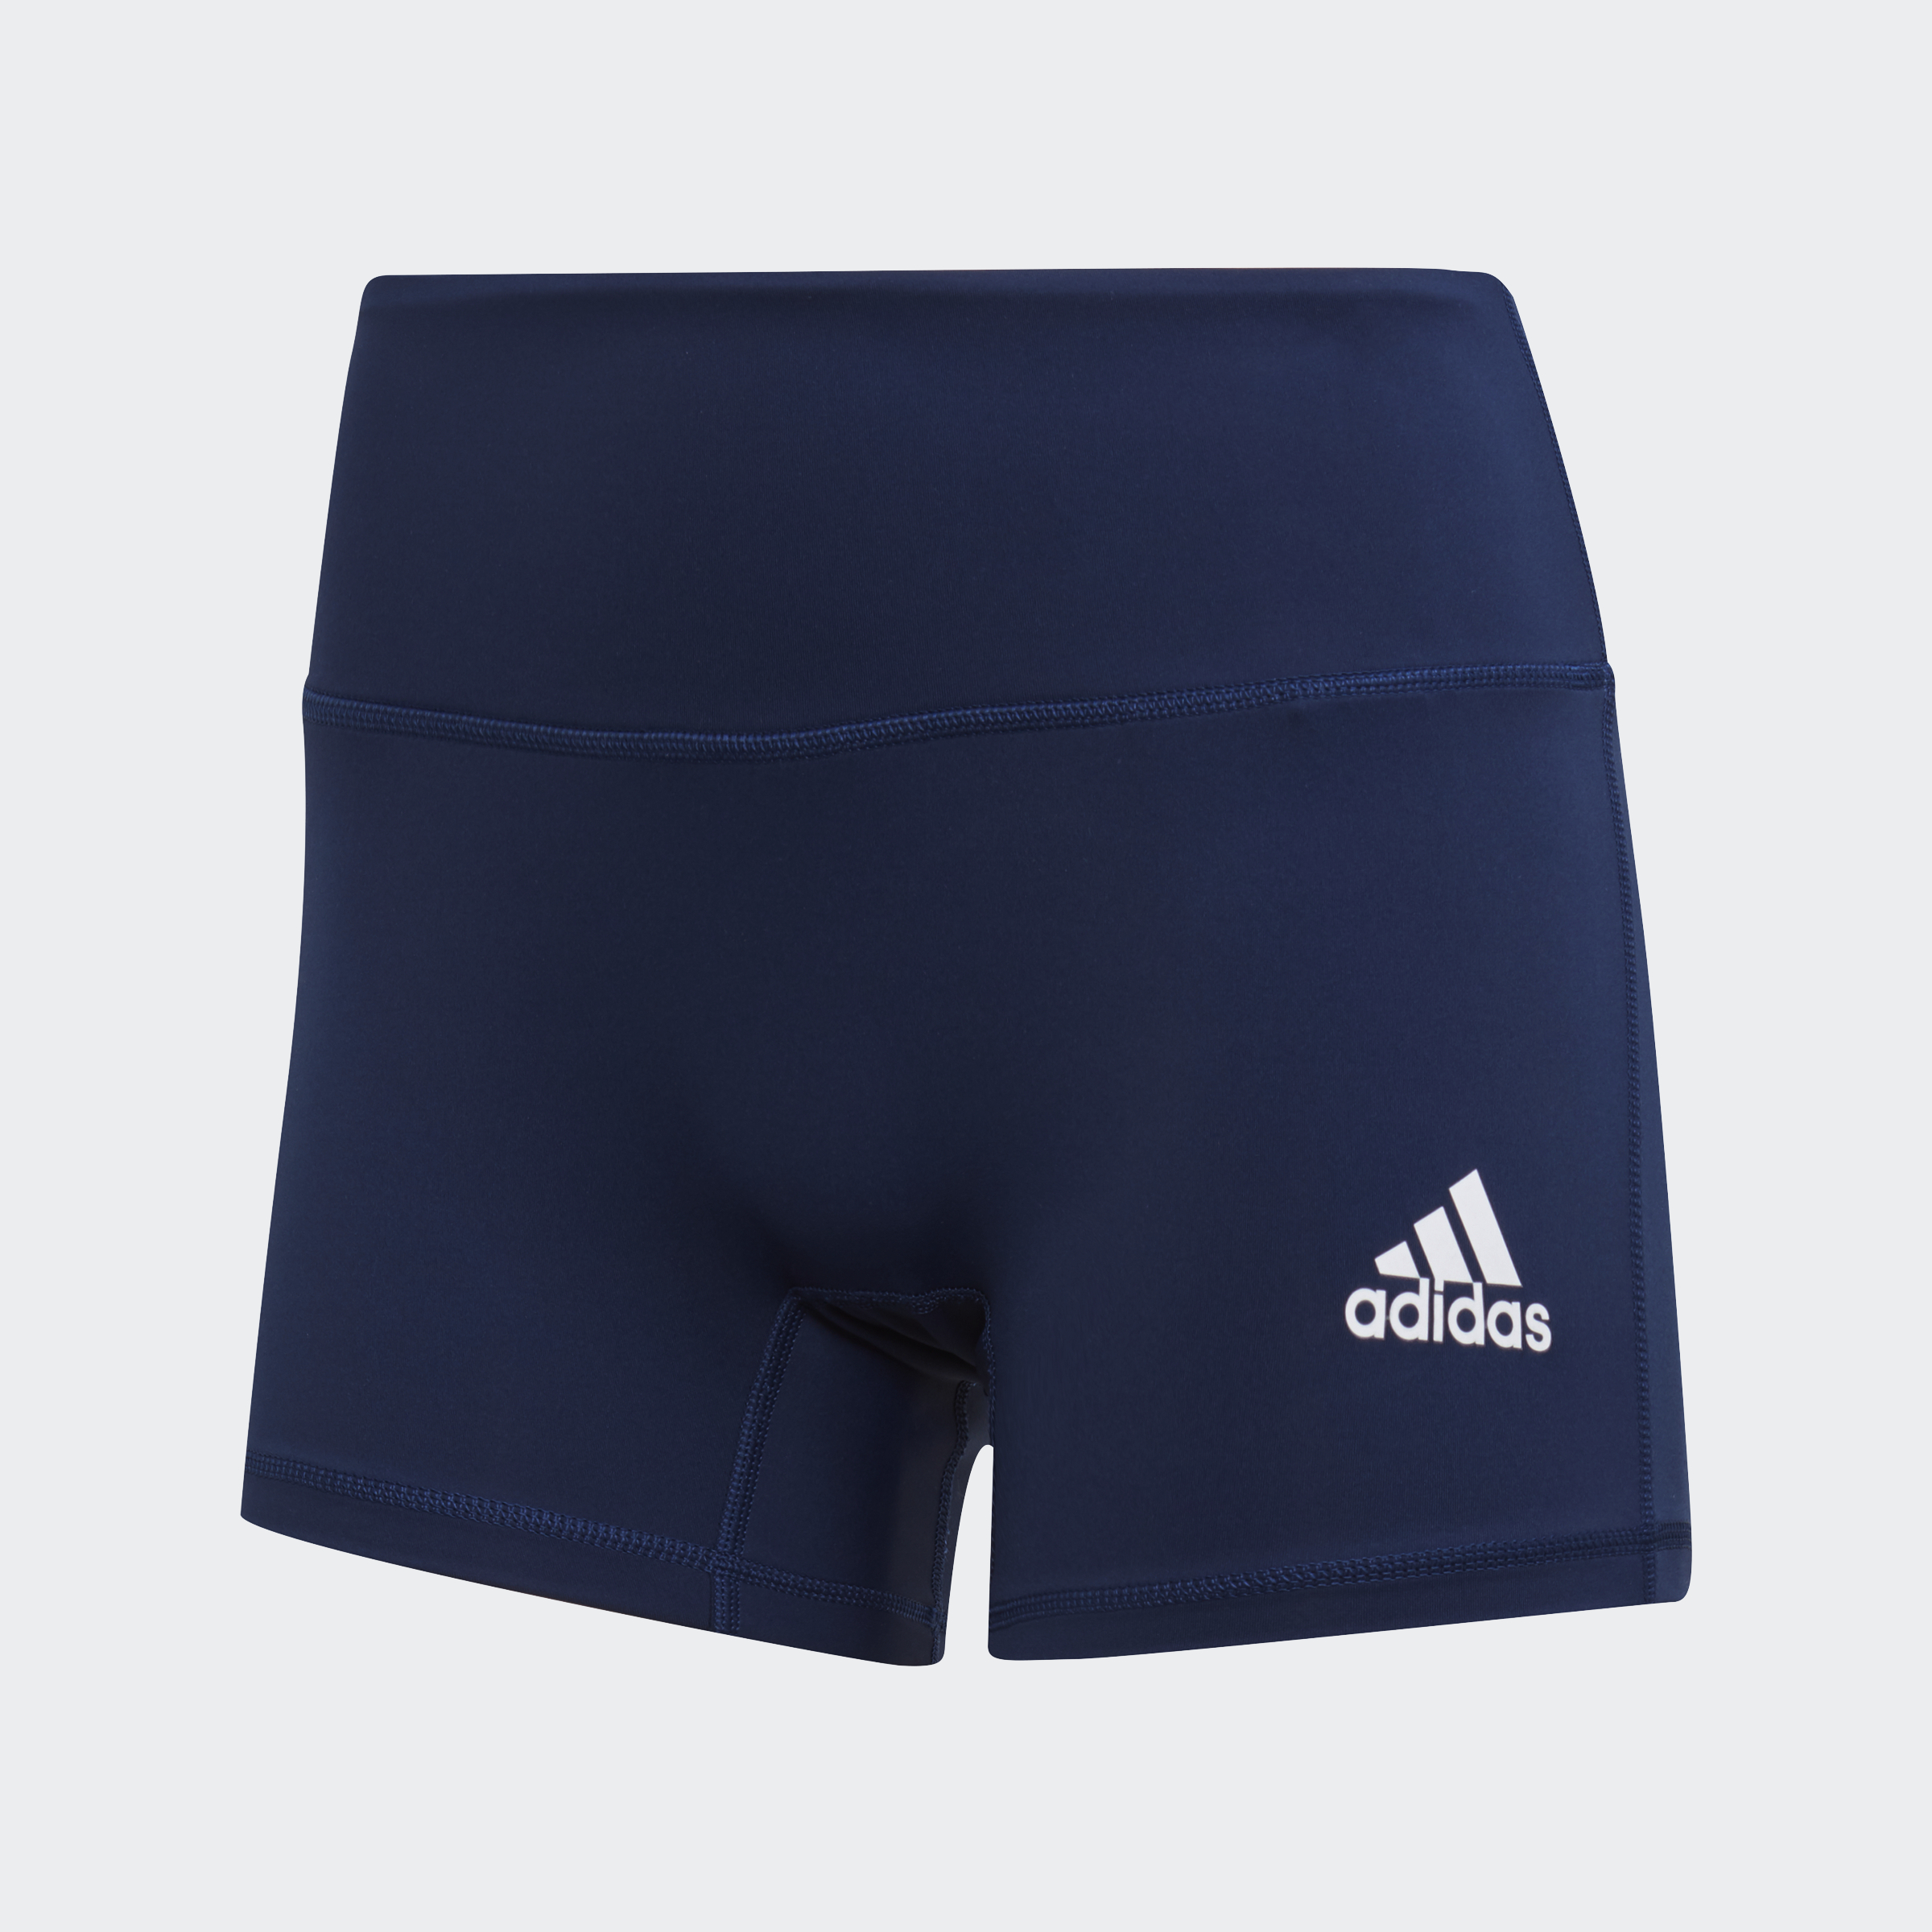 Шорты adidas all Set 9-inch shorts. Шорты 24